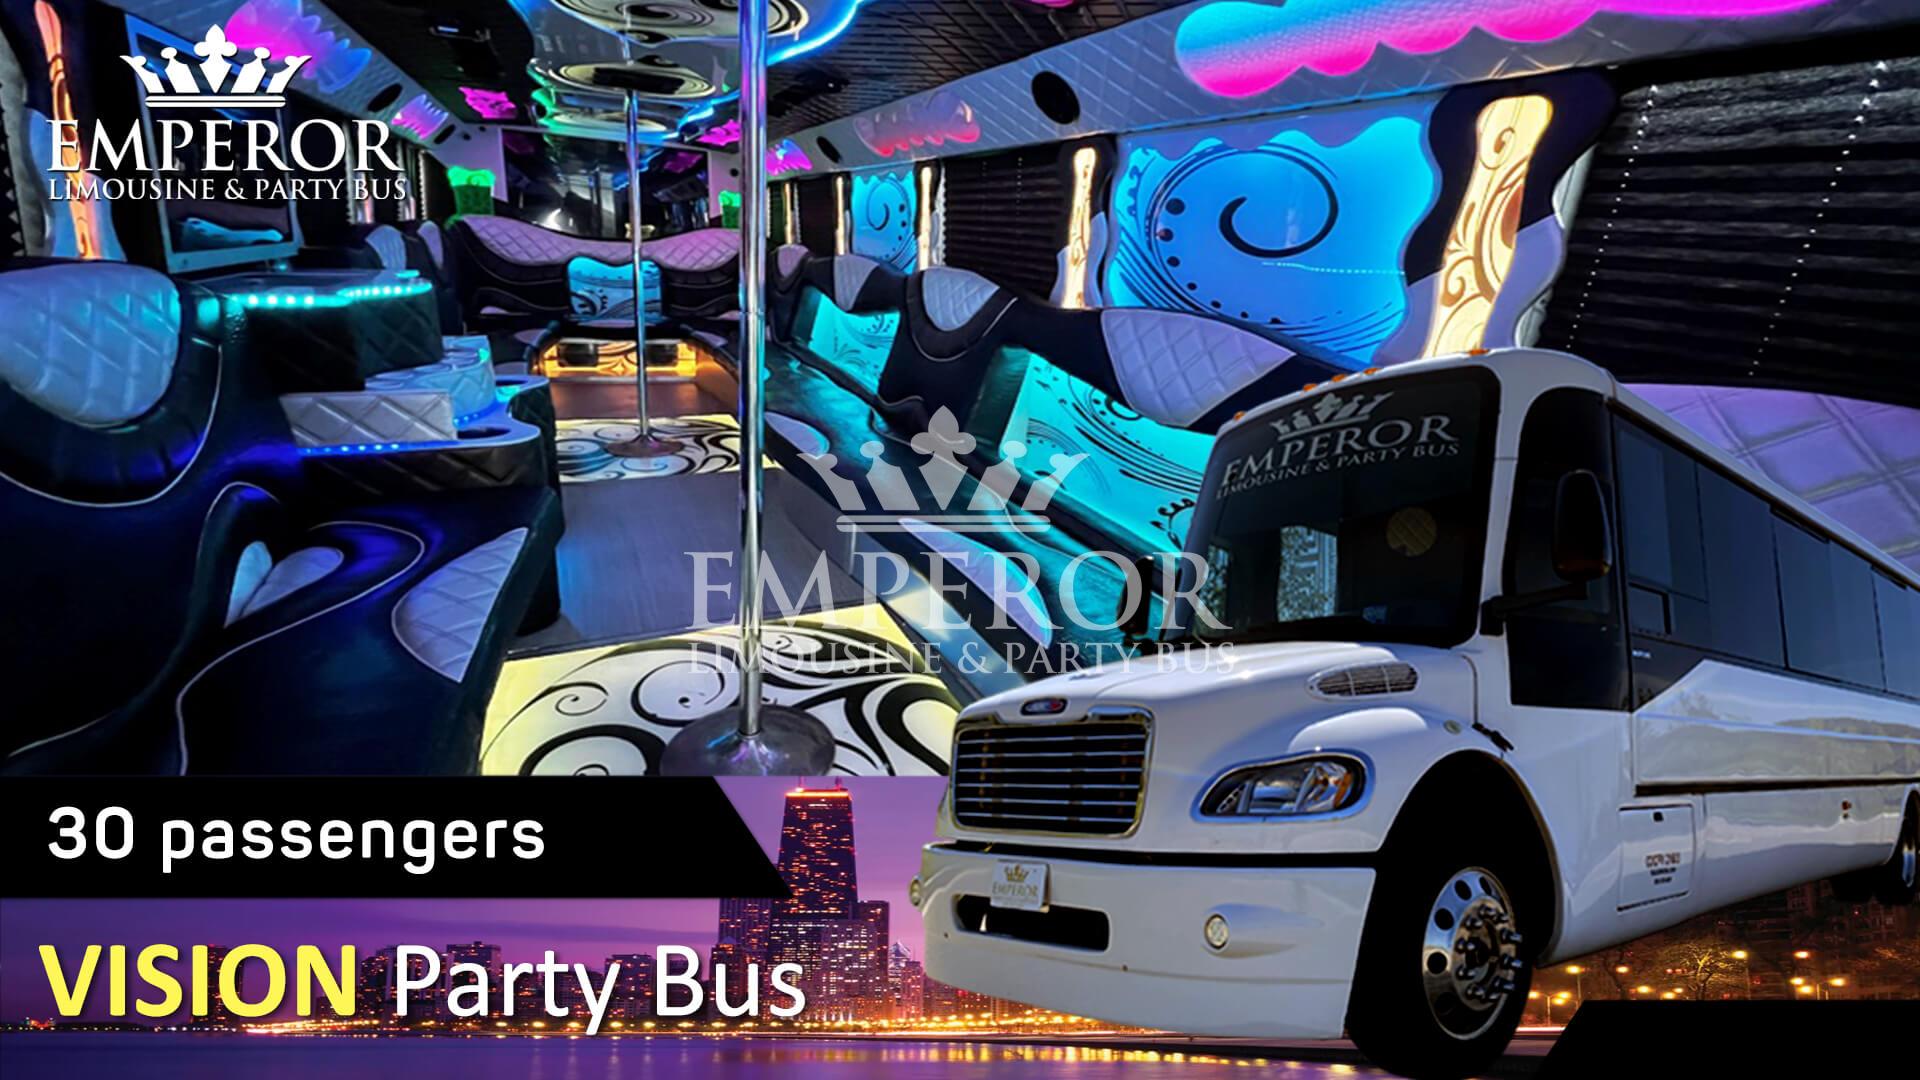 Berwyn party bus - Vision Edition